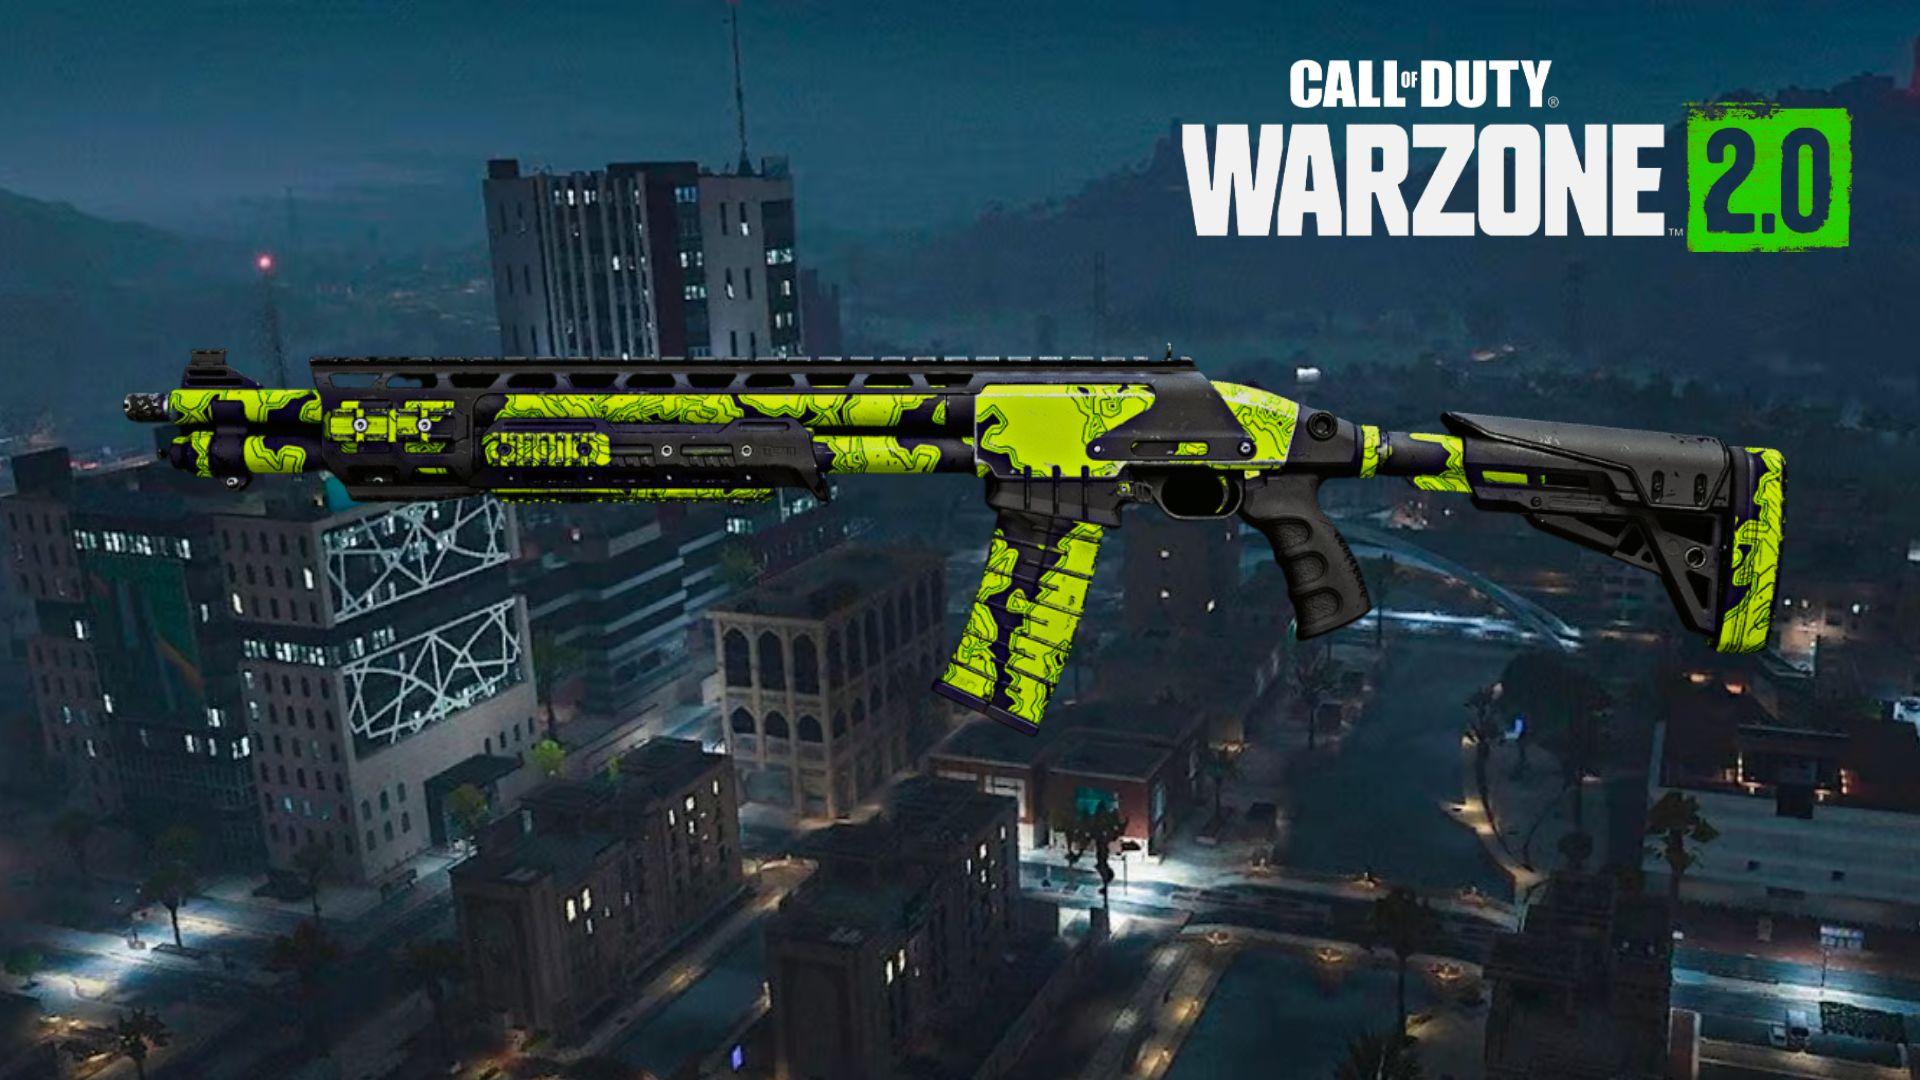 Bryson 800 shotgun in Warzone with green skin over nighttime map